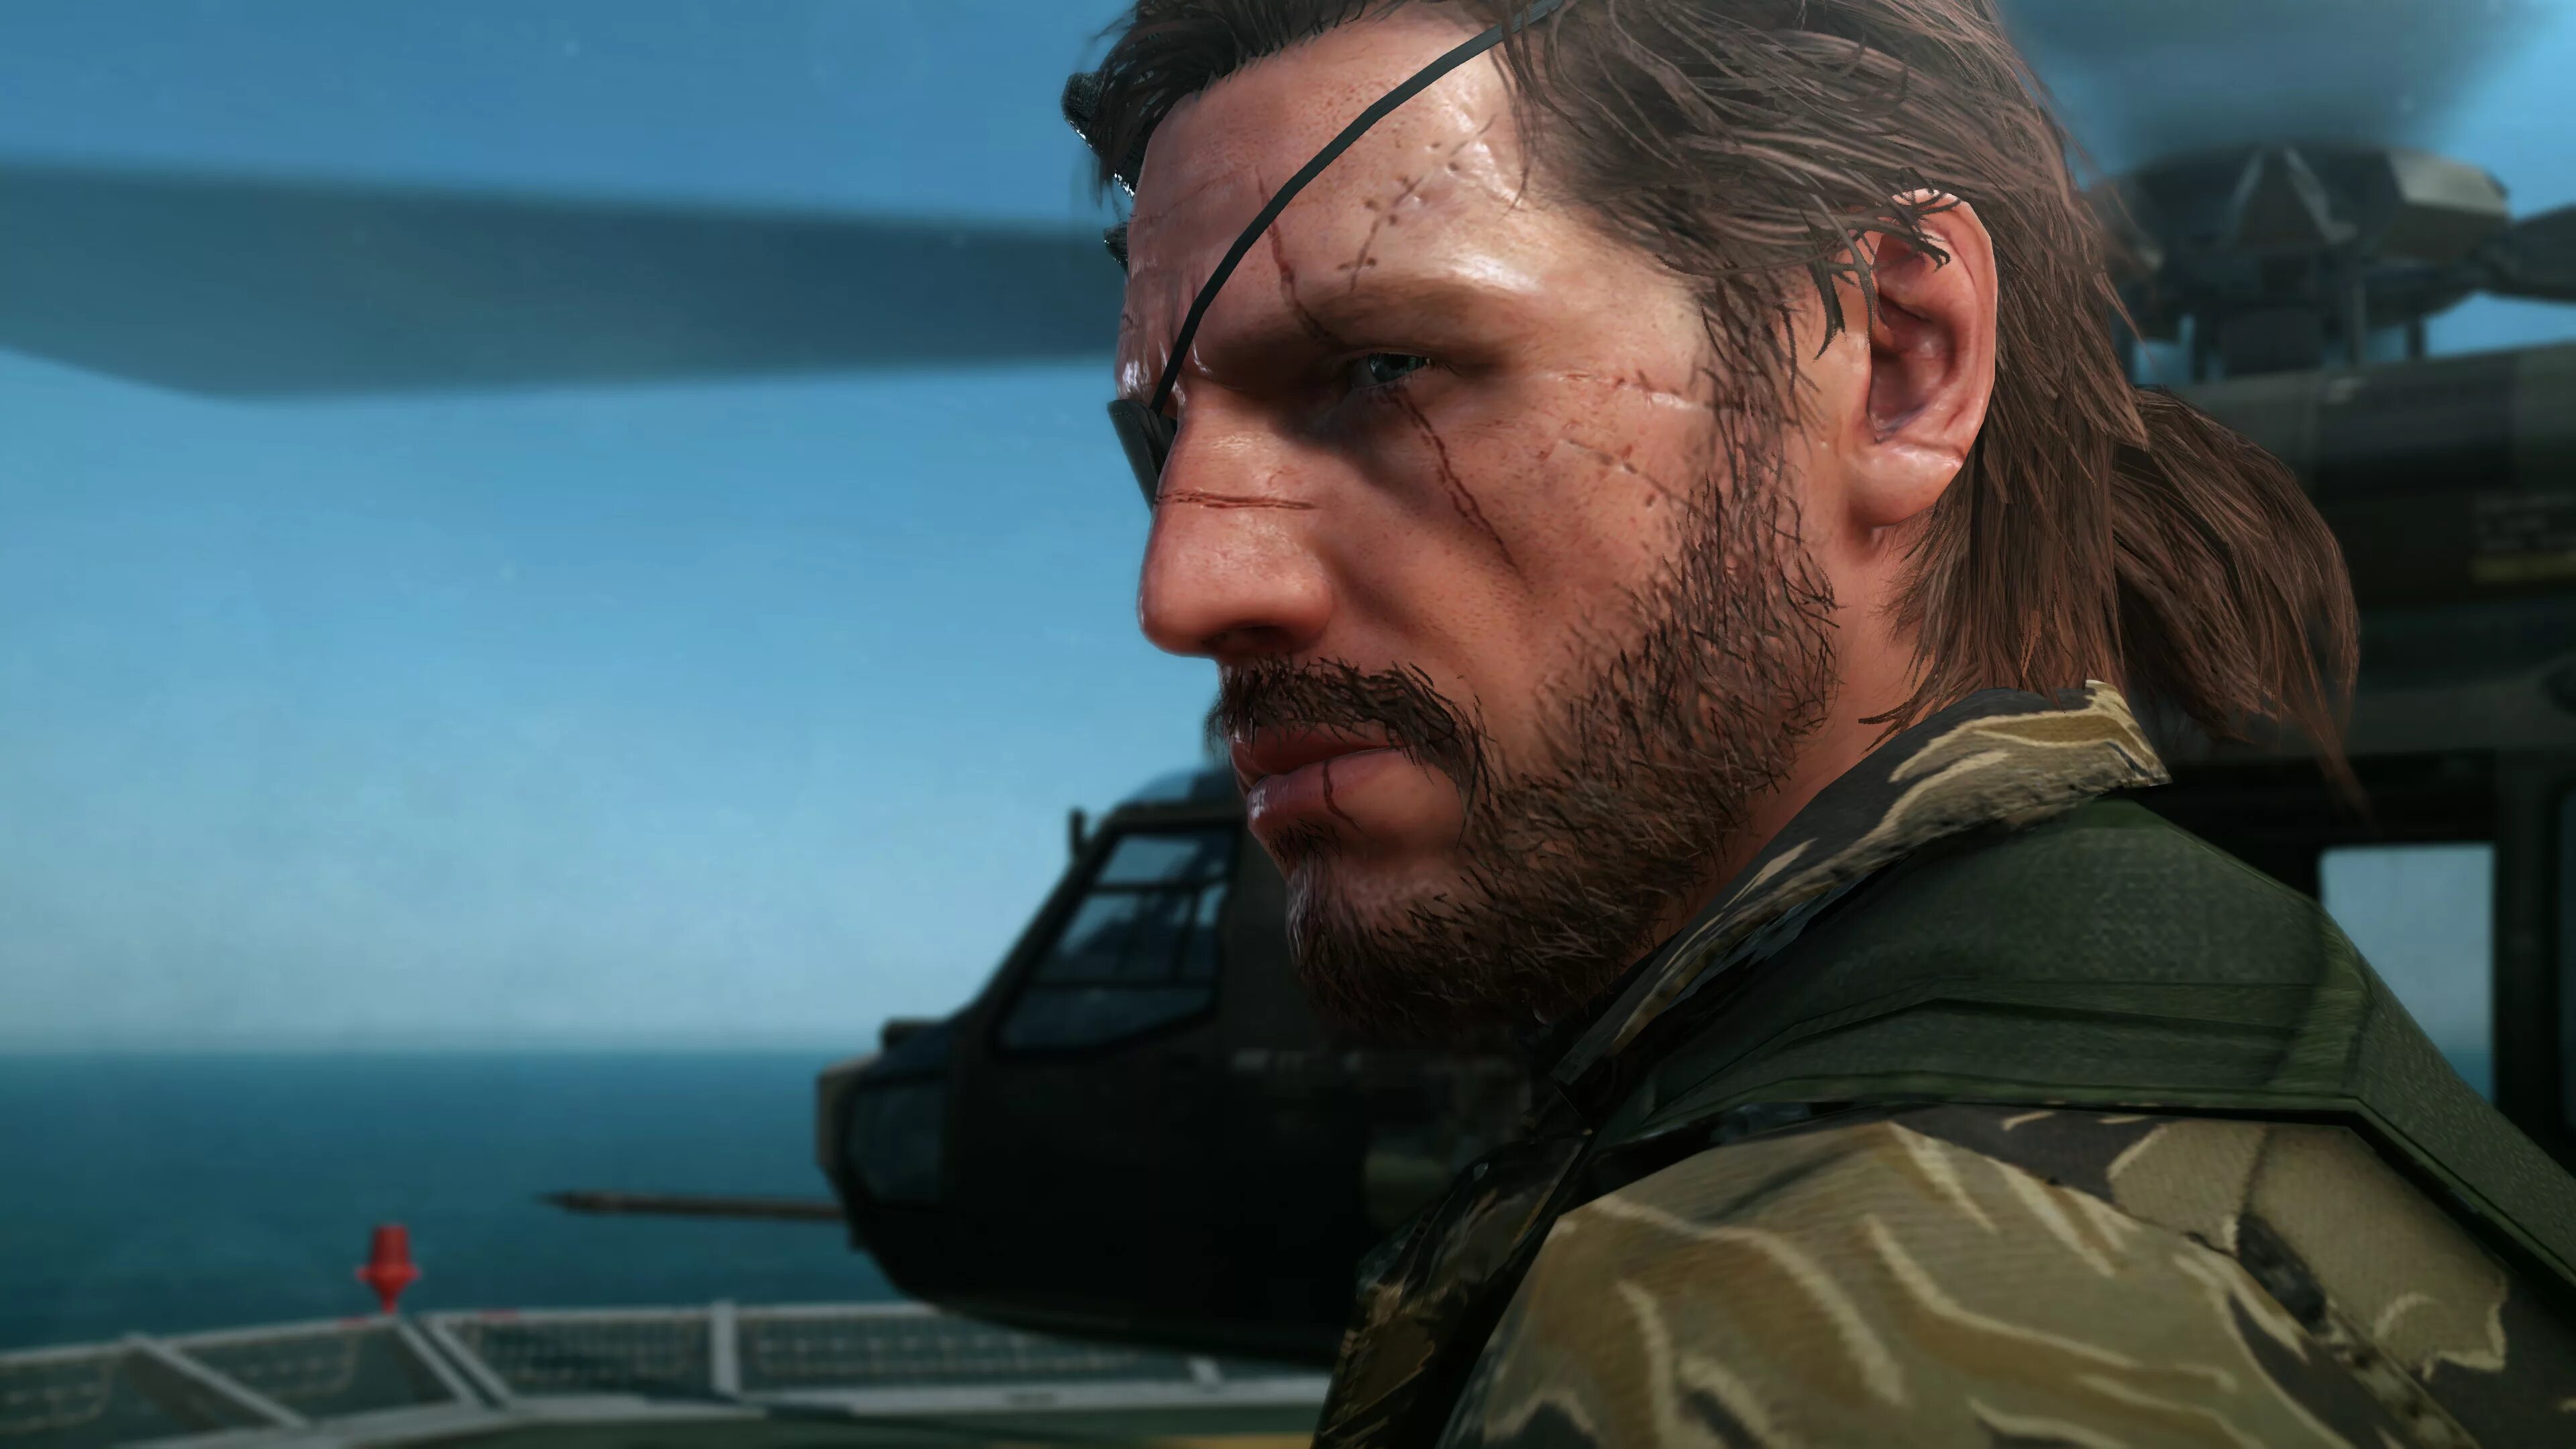 Big Boss MGS 5. Big Boss Metal Gear Solid 5. Слушать биг босса